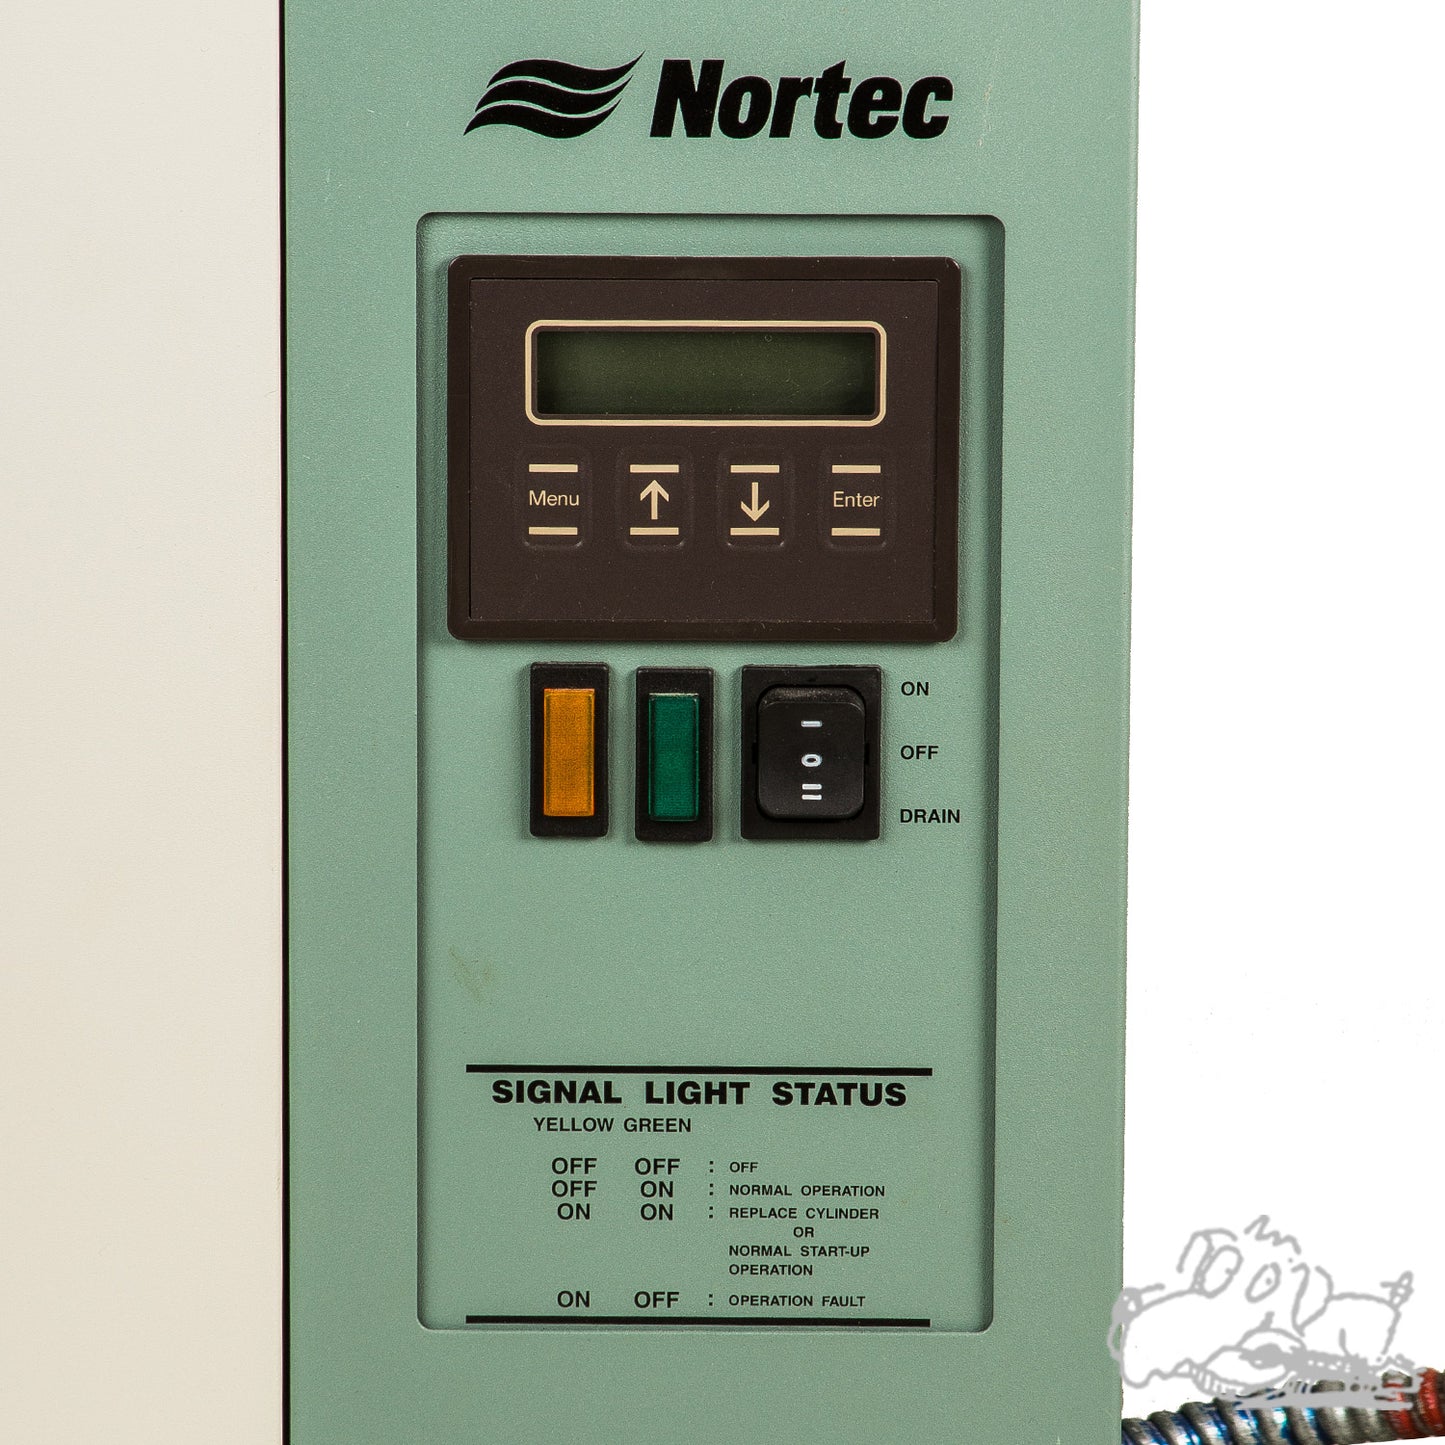 Nortec NHMC 020 - 3 Phase, 208V Industrial Humidifier